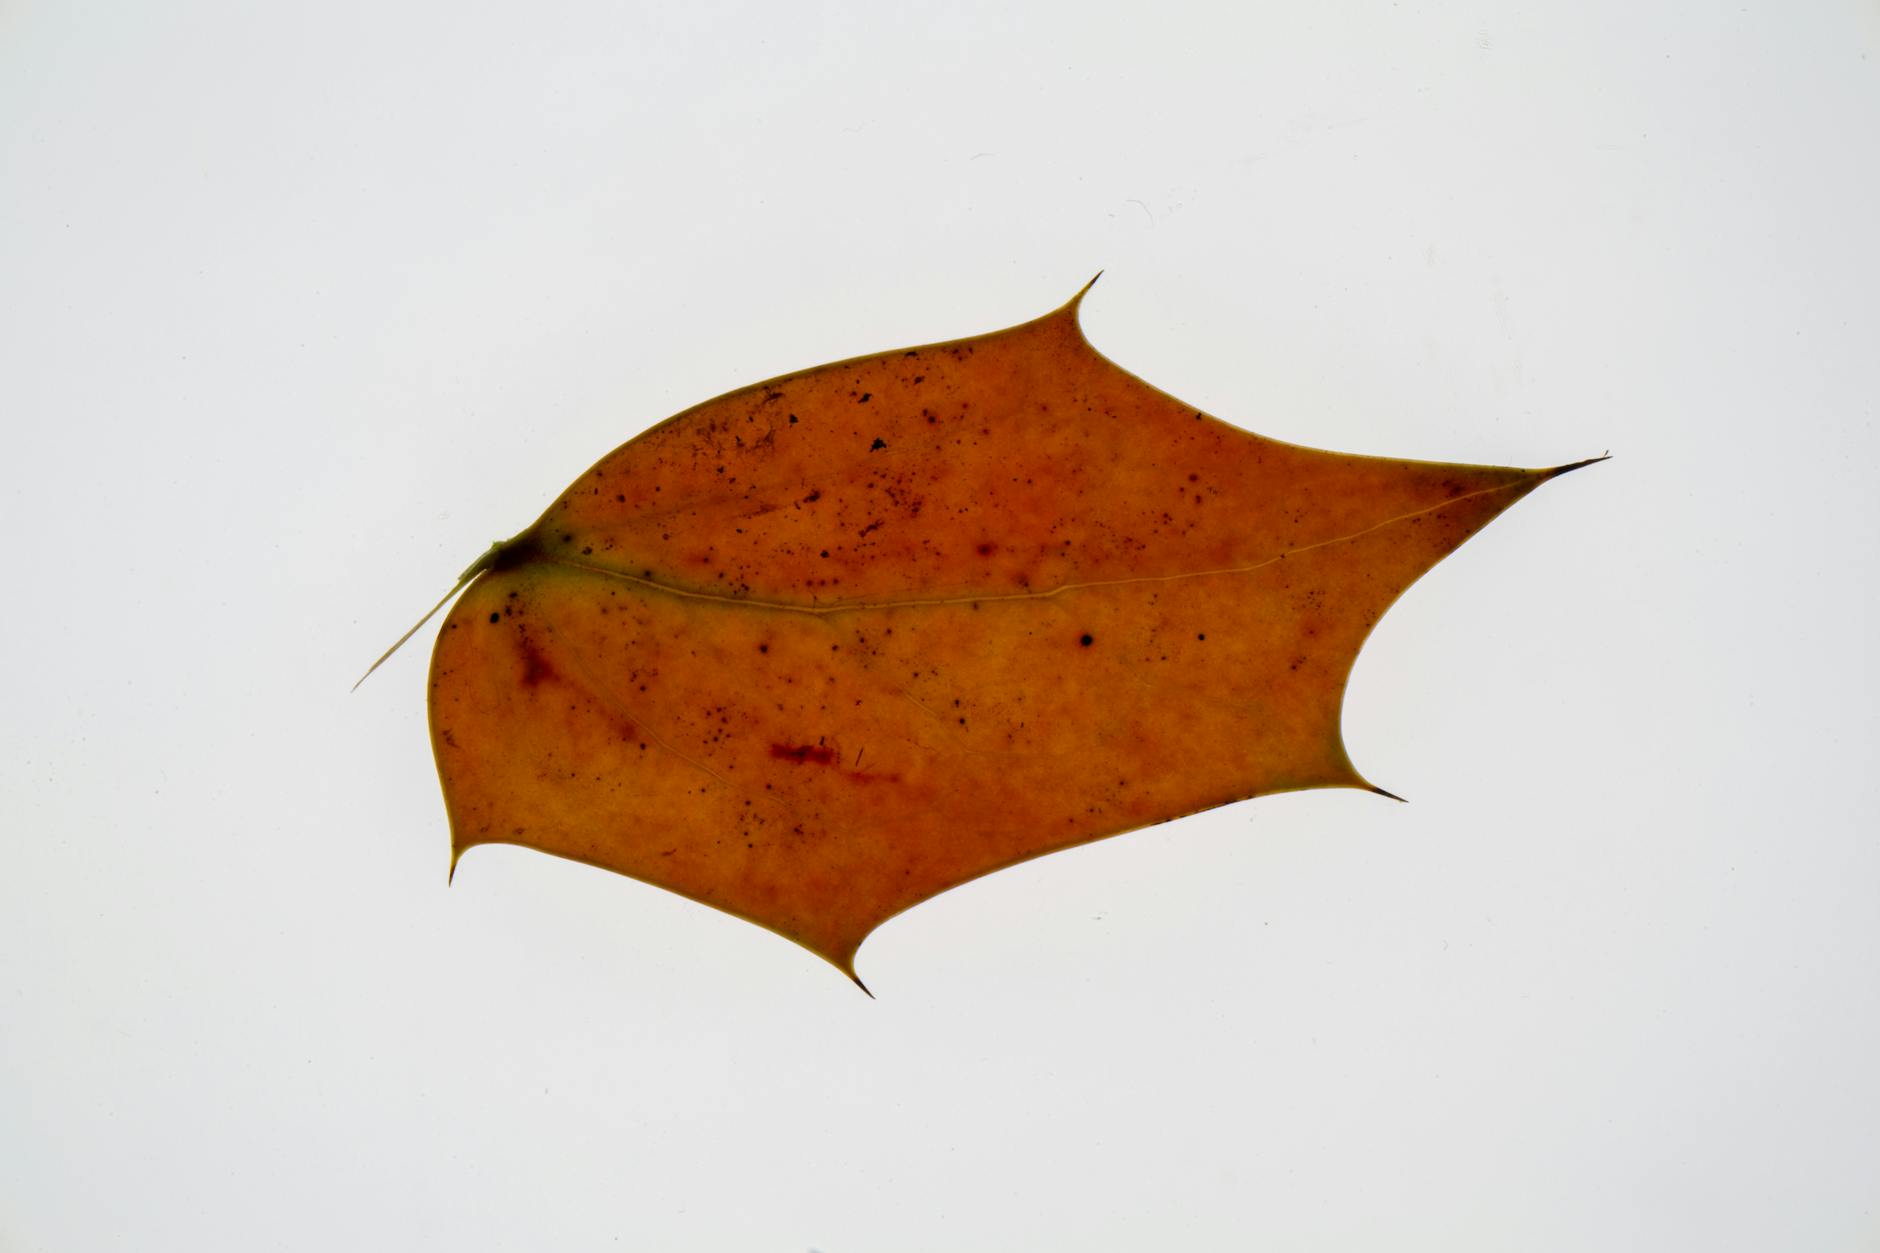 Fallen autumn maple leaf on white background